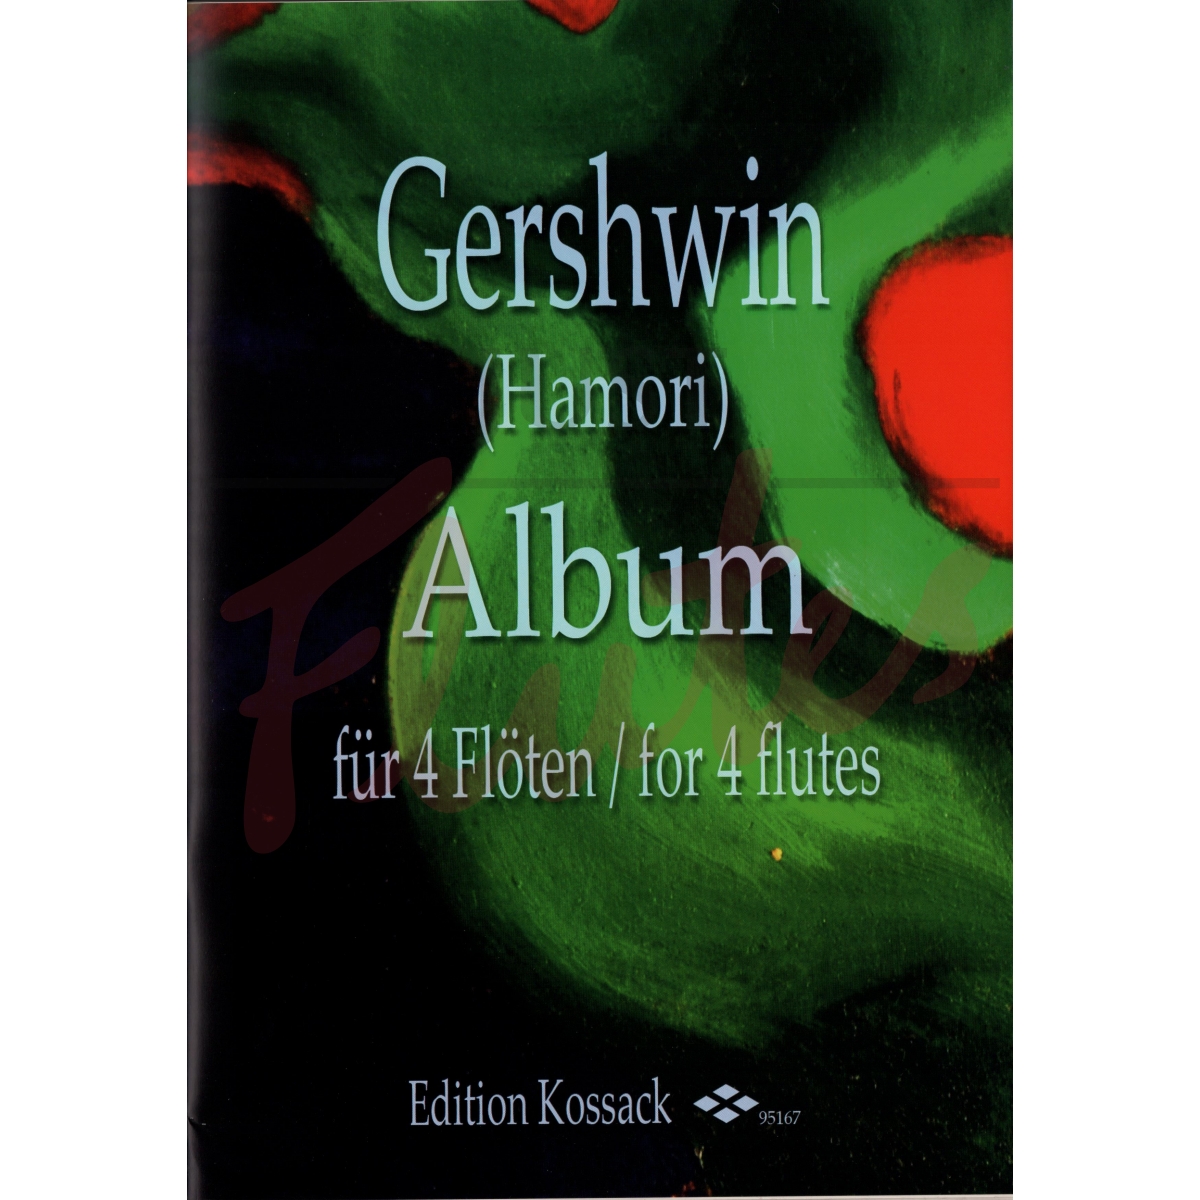 Gershwin Album for Four Flutes